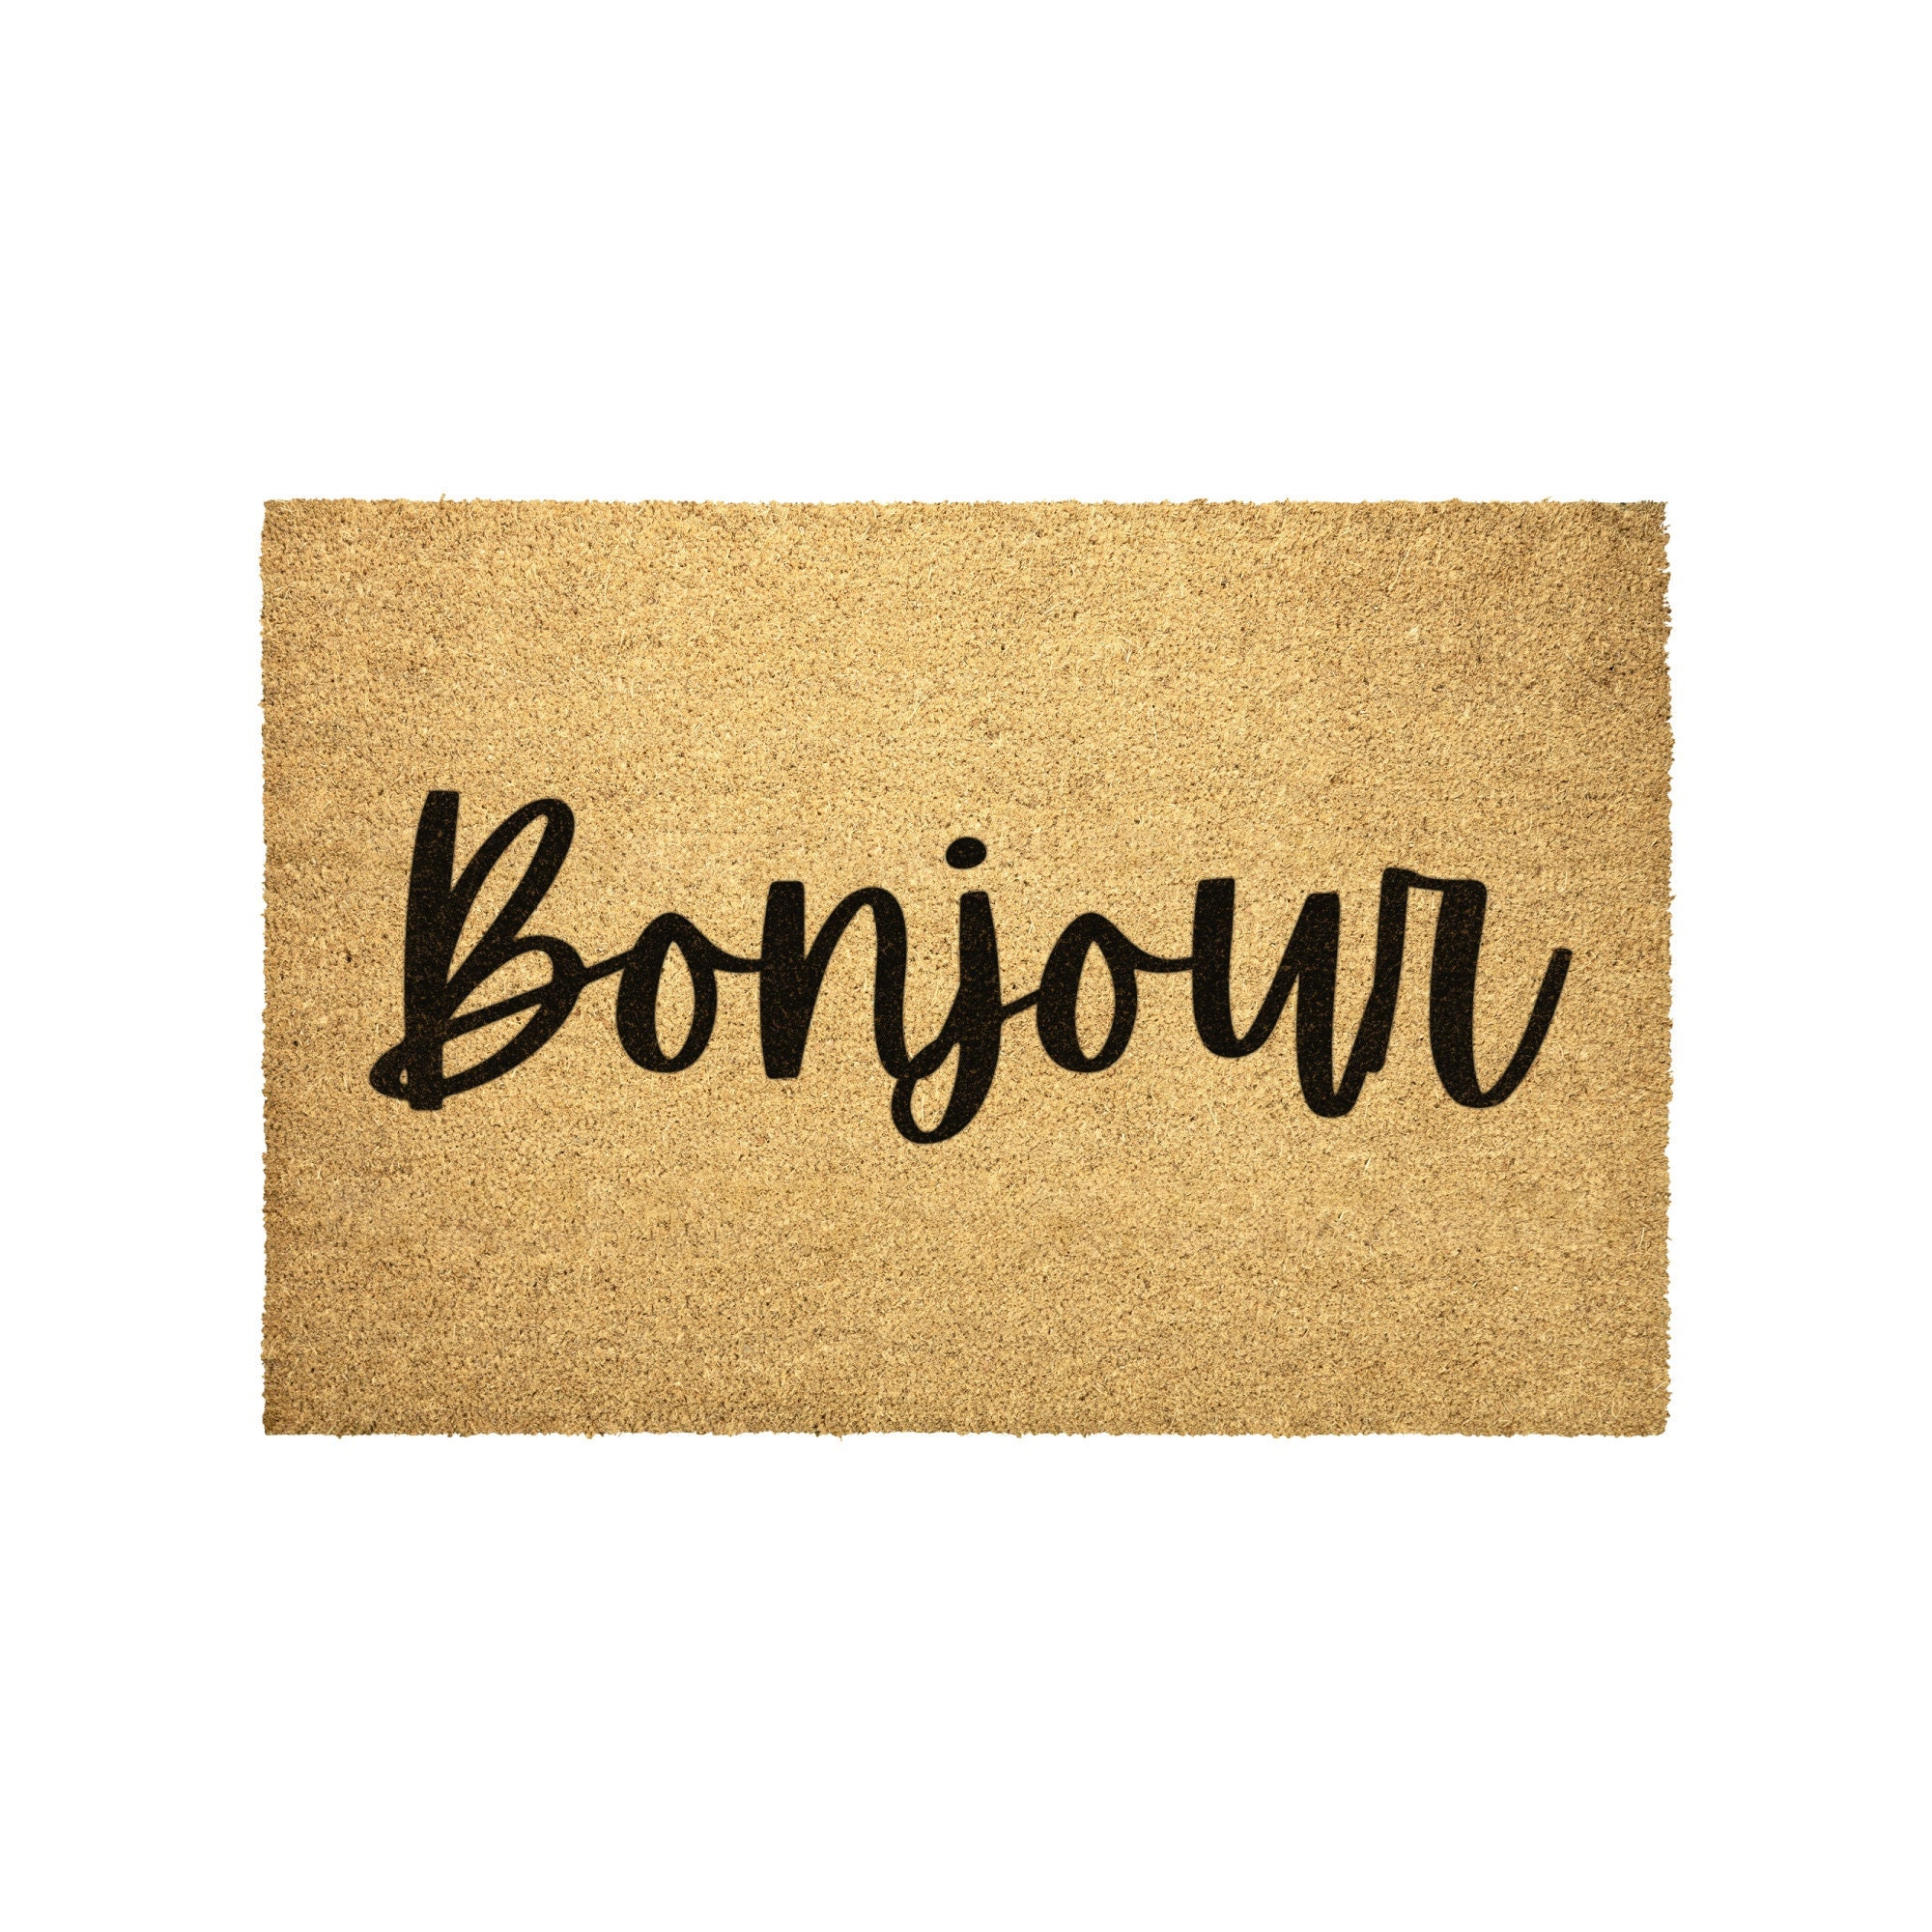 Bonjour French Doormat France Welcome Mat Welcome Doormat Flat